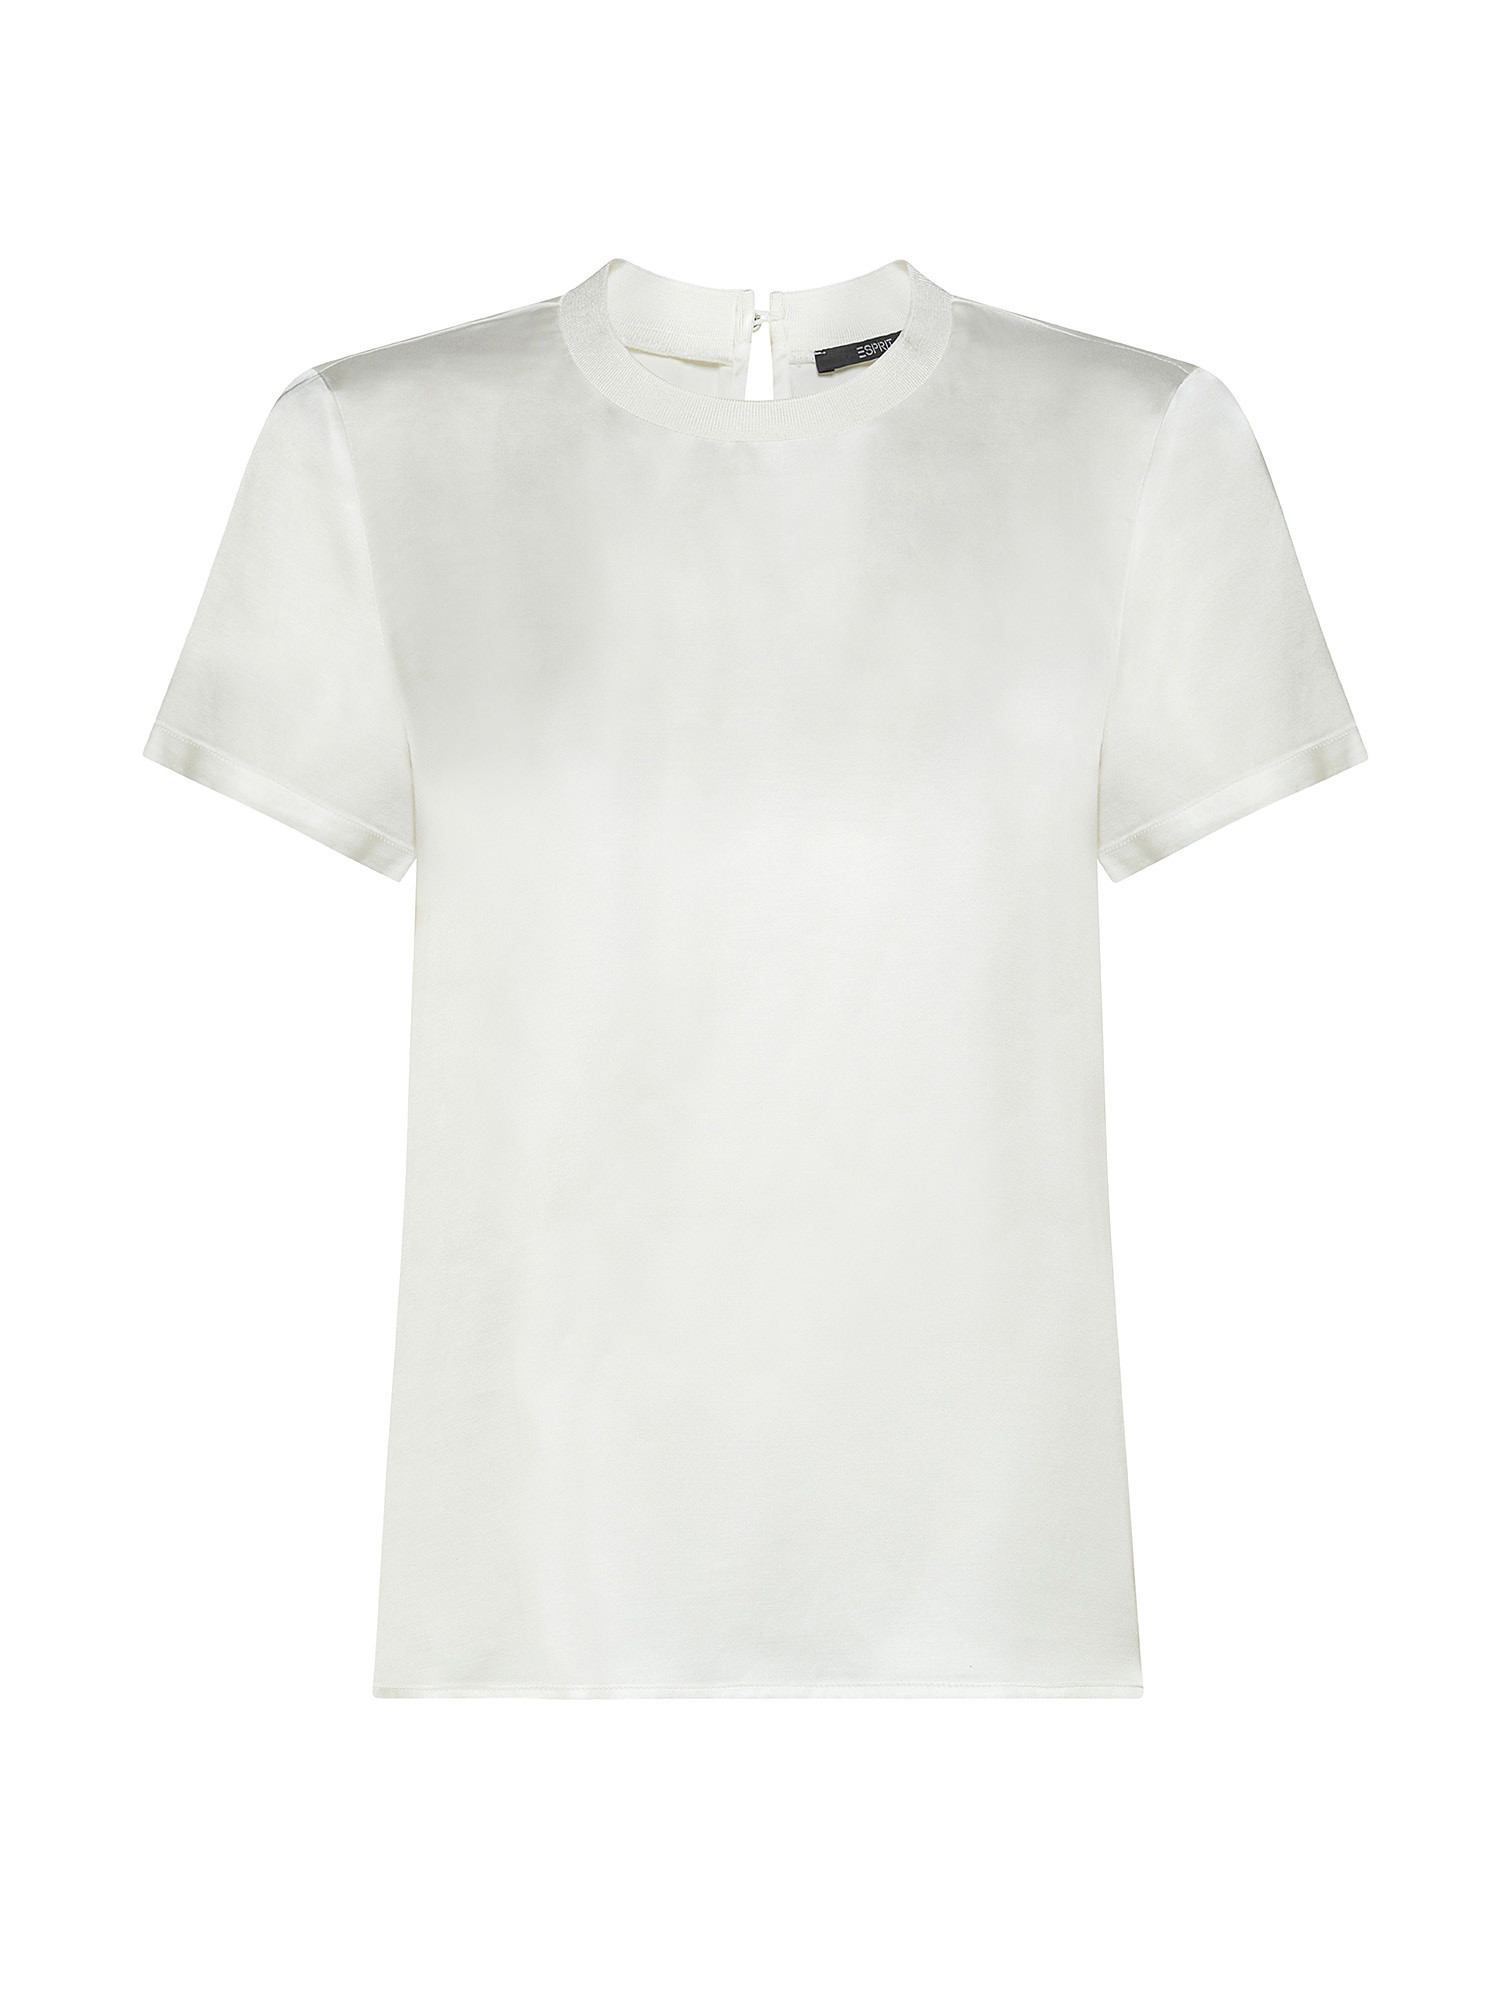 Satin blouse, Off White, large image number 0